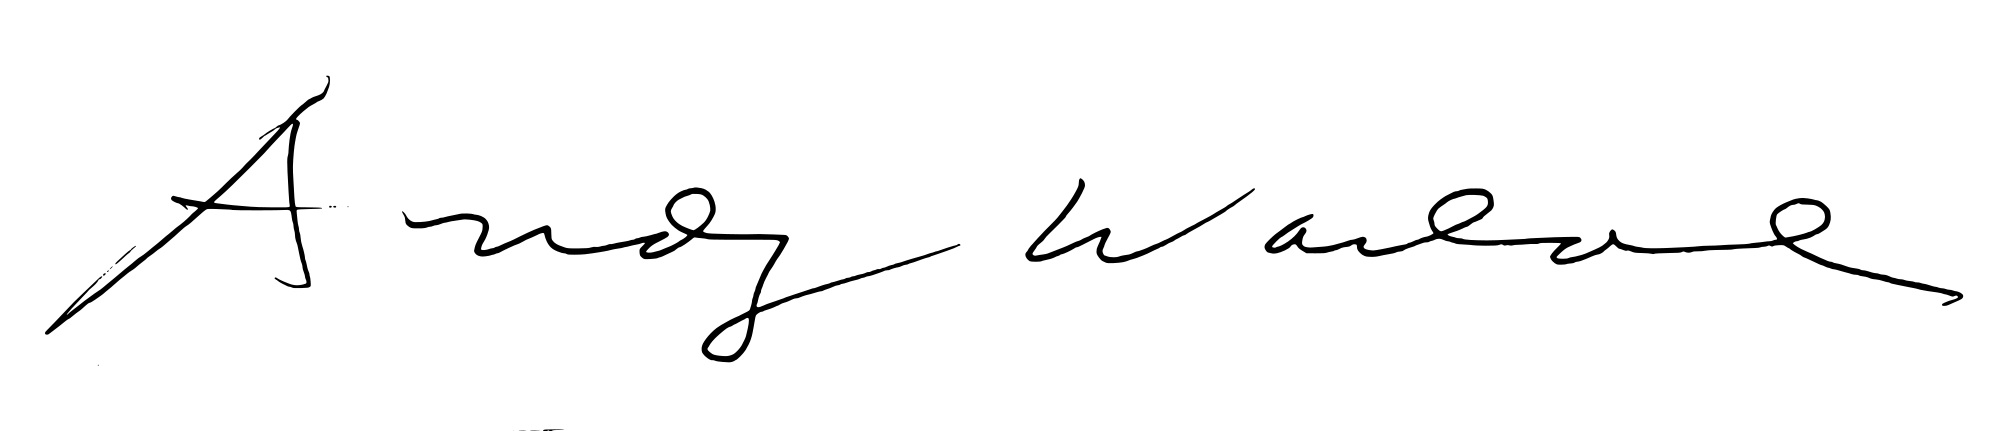 Andy Warhol Logo - Andy Warhol signature.svg